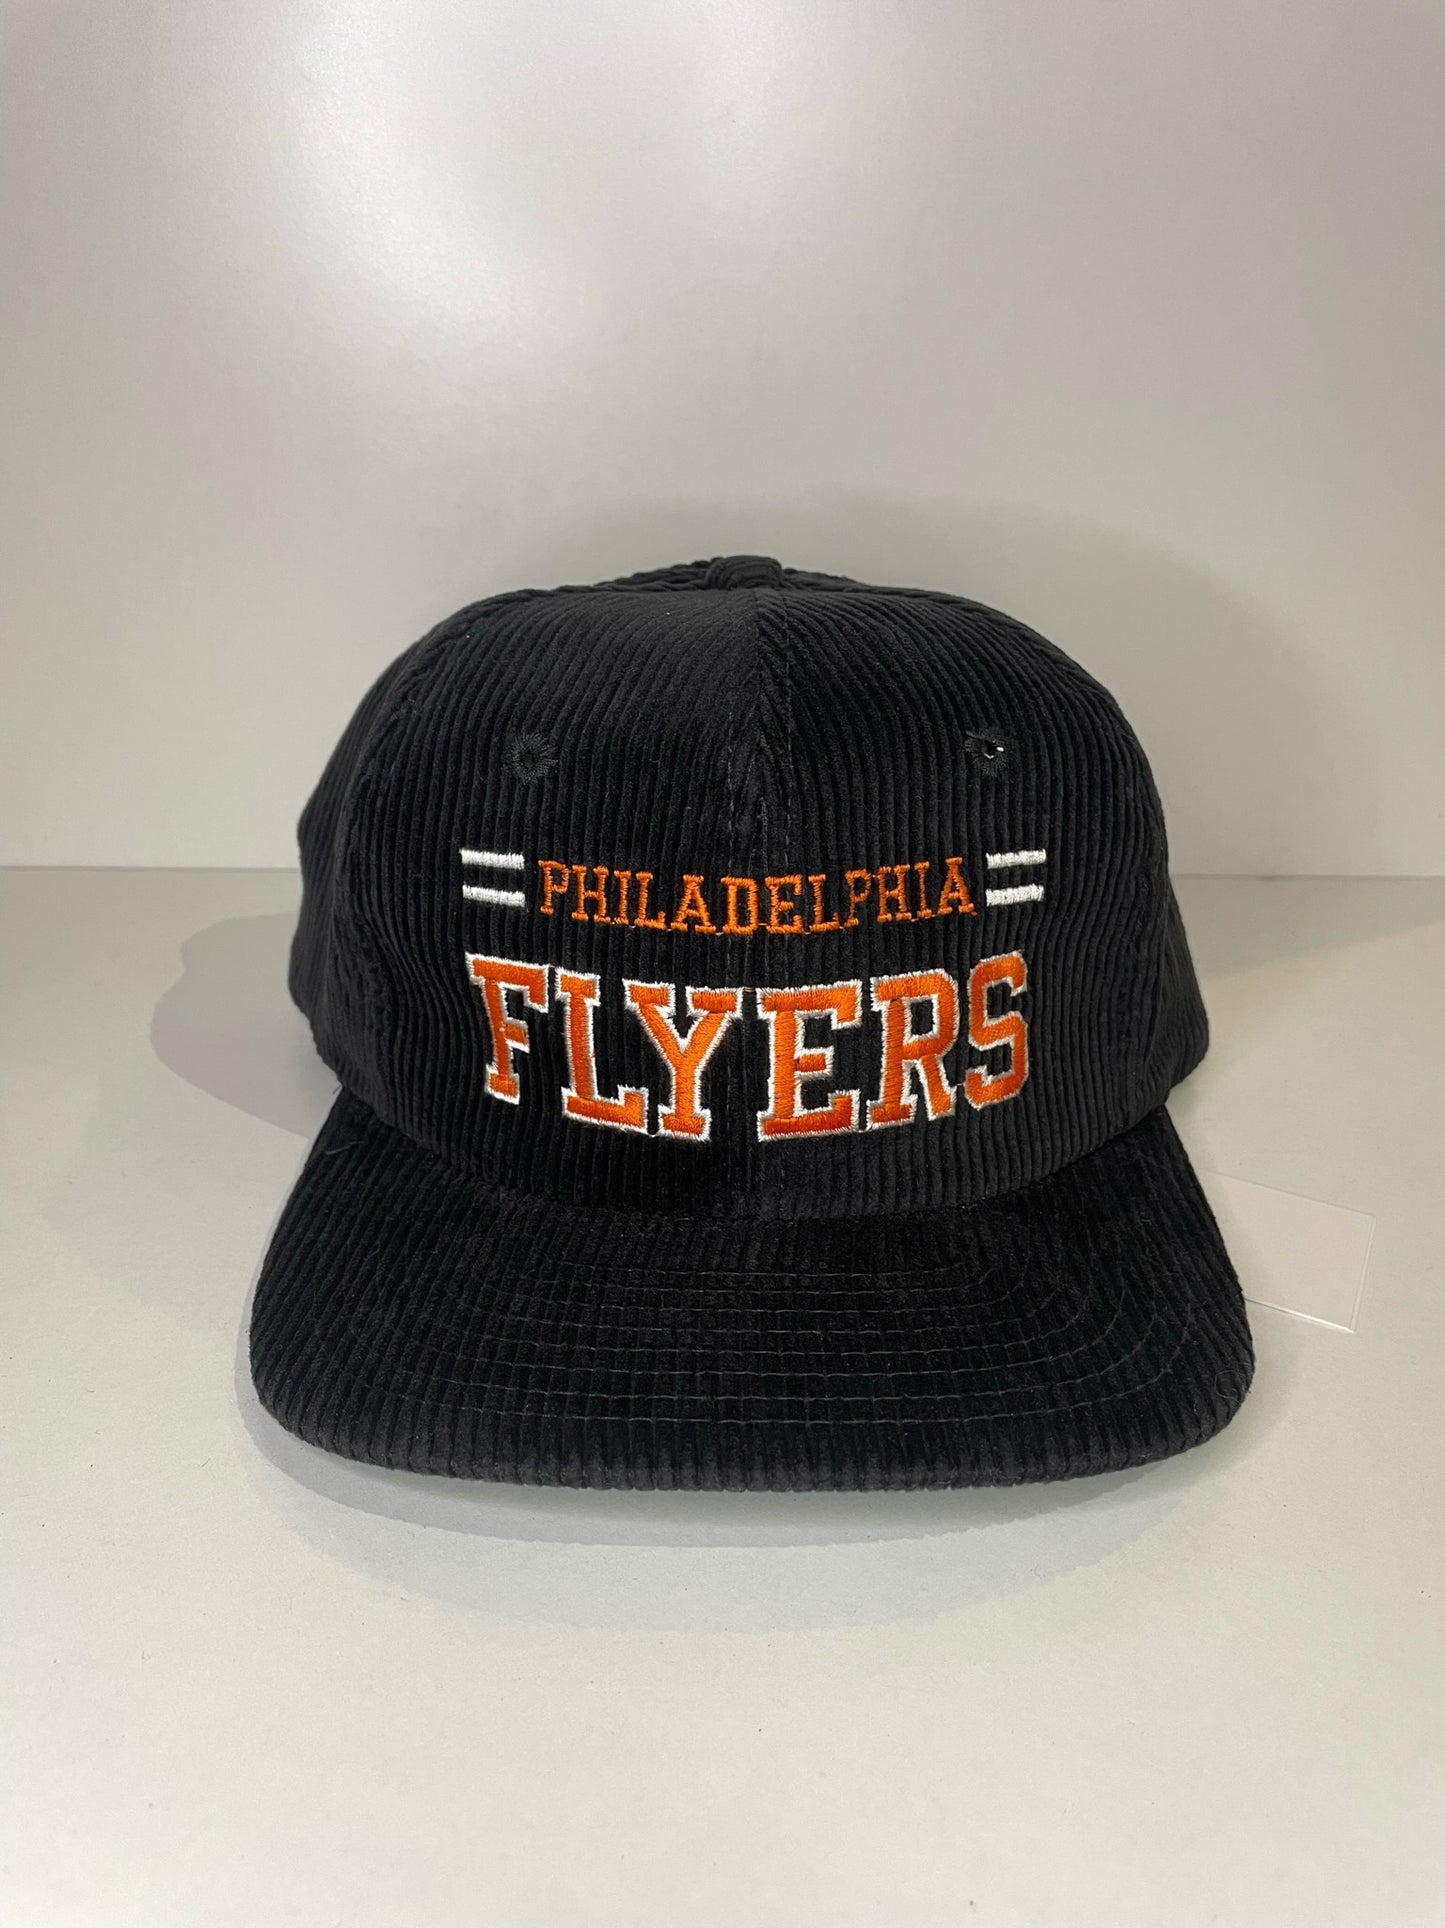 VINTAGE 90s PHILADELPHIA FLYERS TWINS CORDUROY SNAPBACK CAP HAT